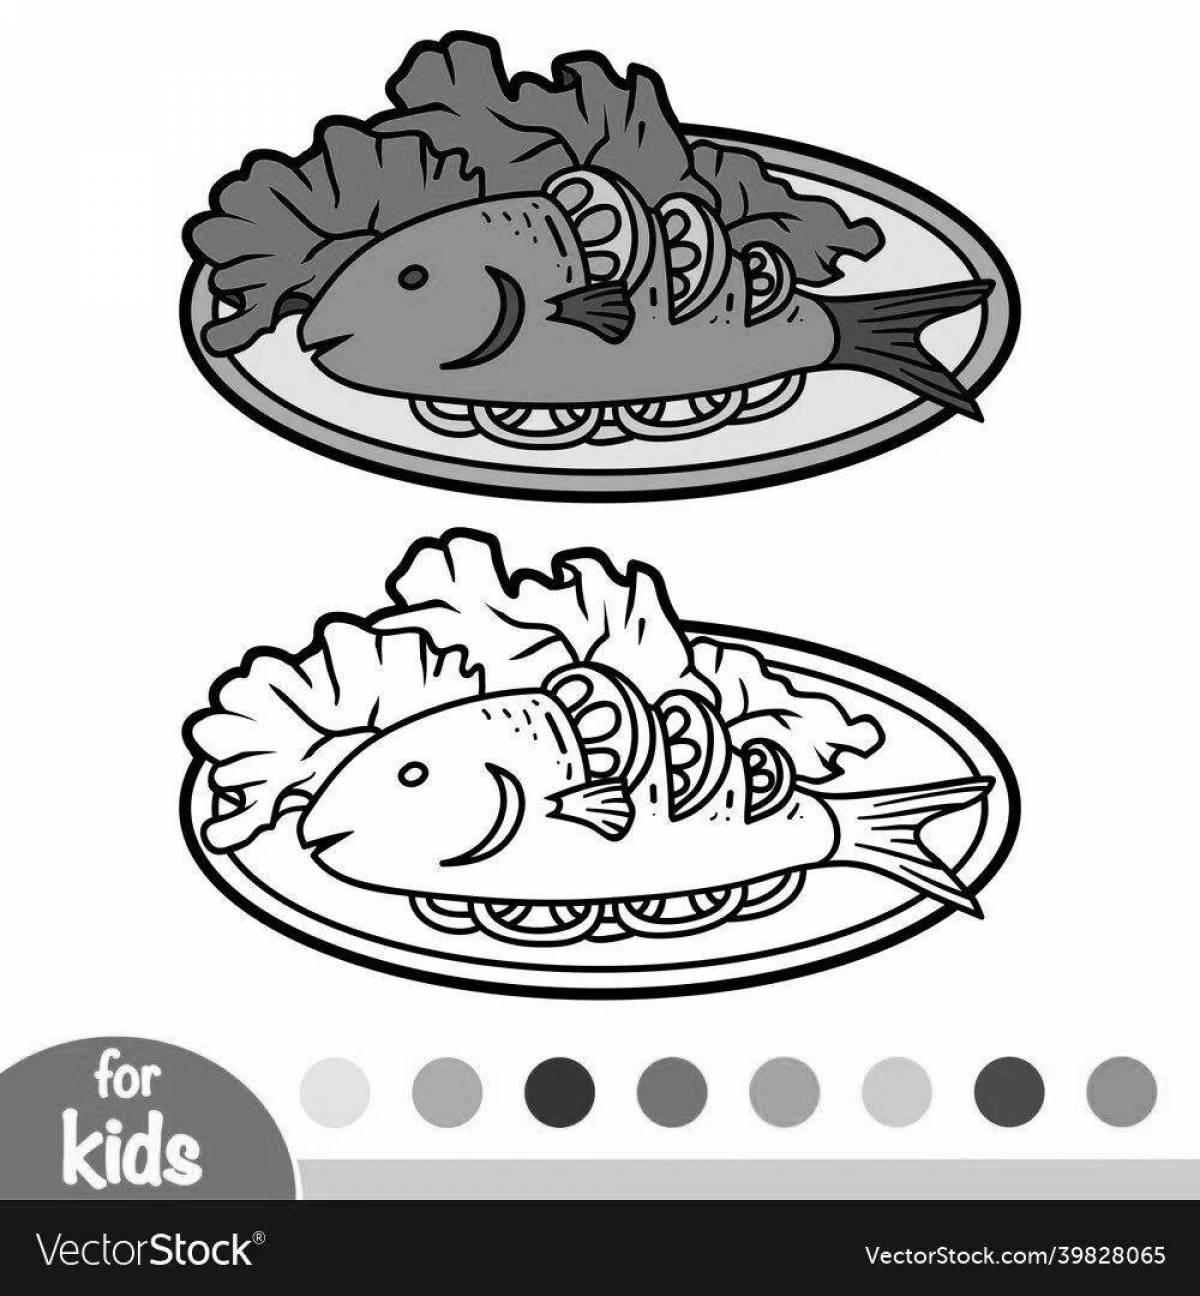 Royal fried fish coloring page